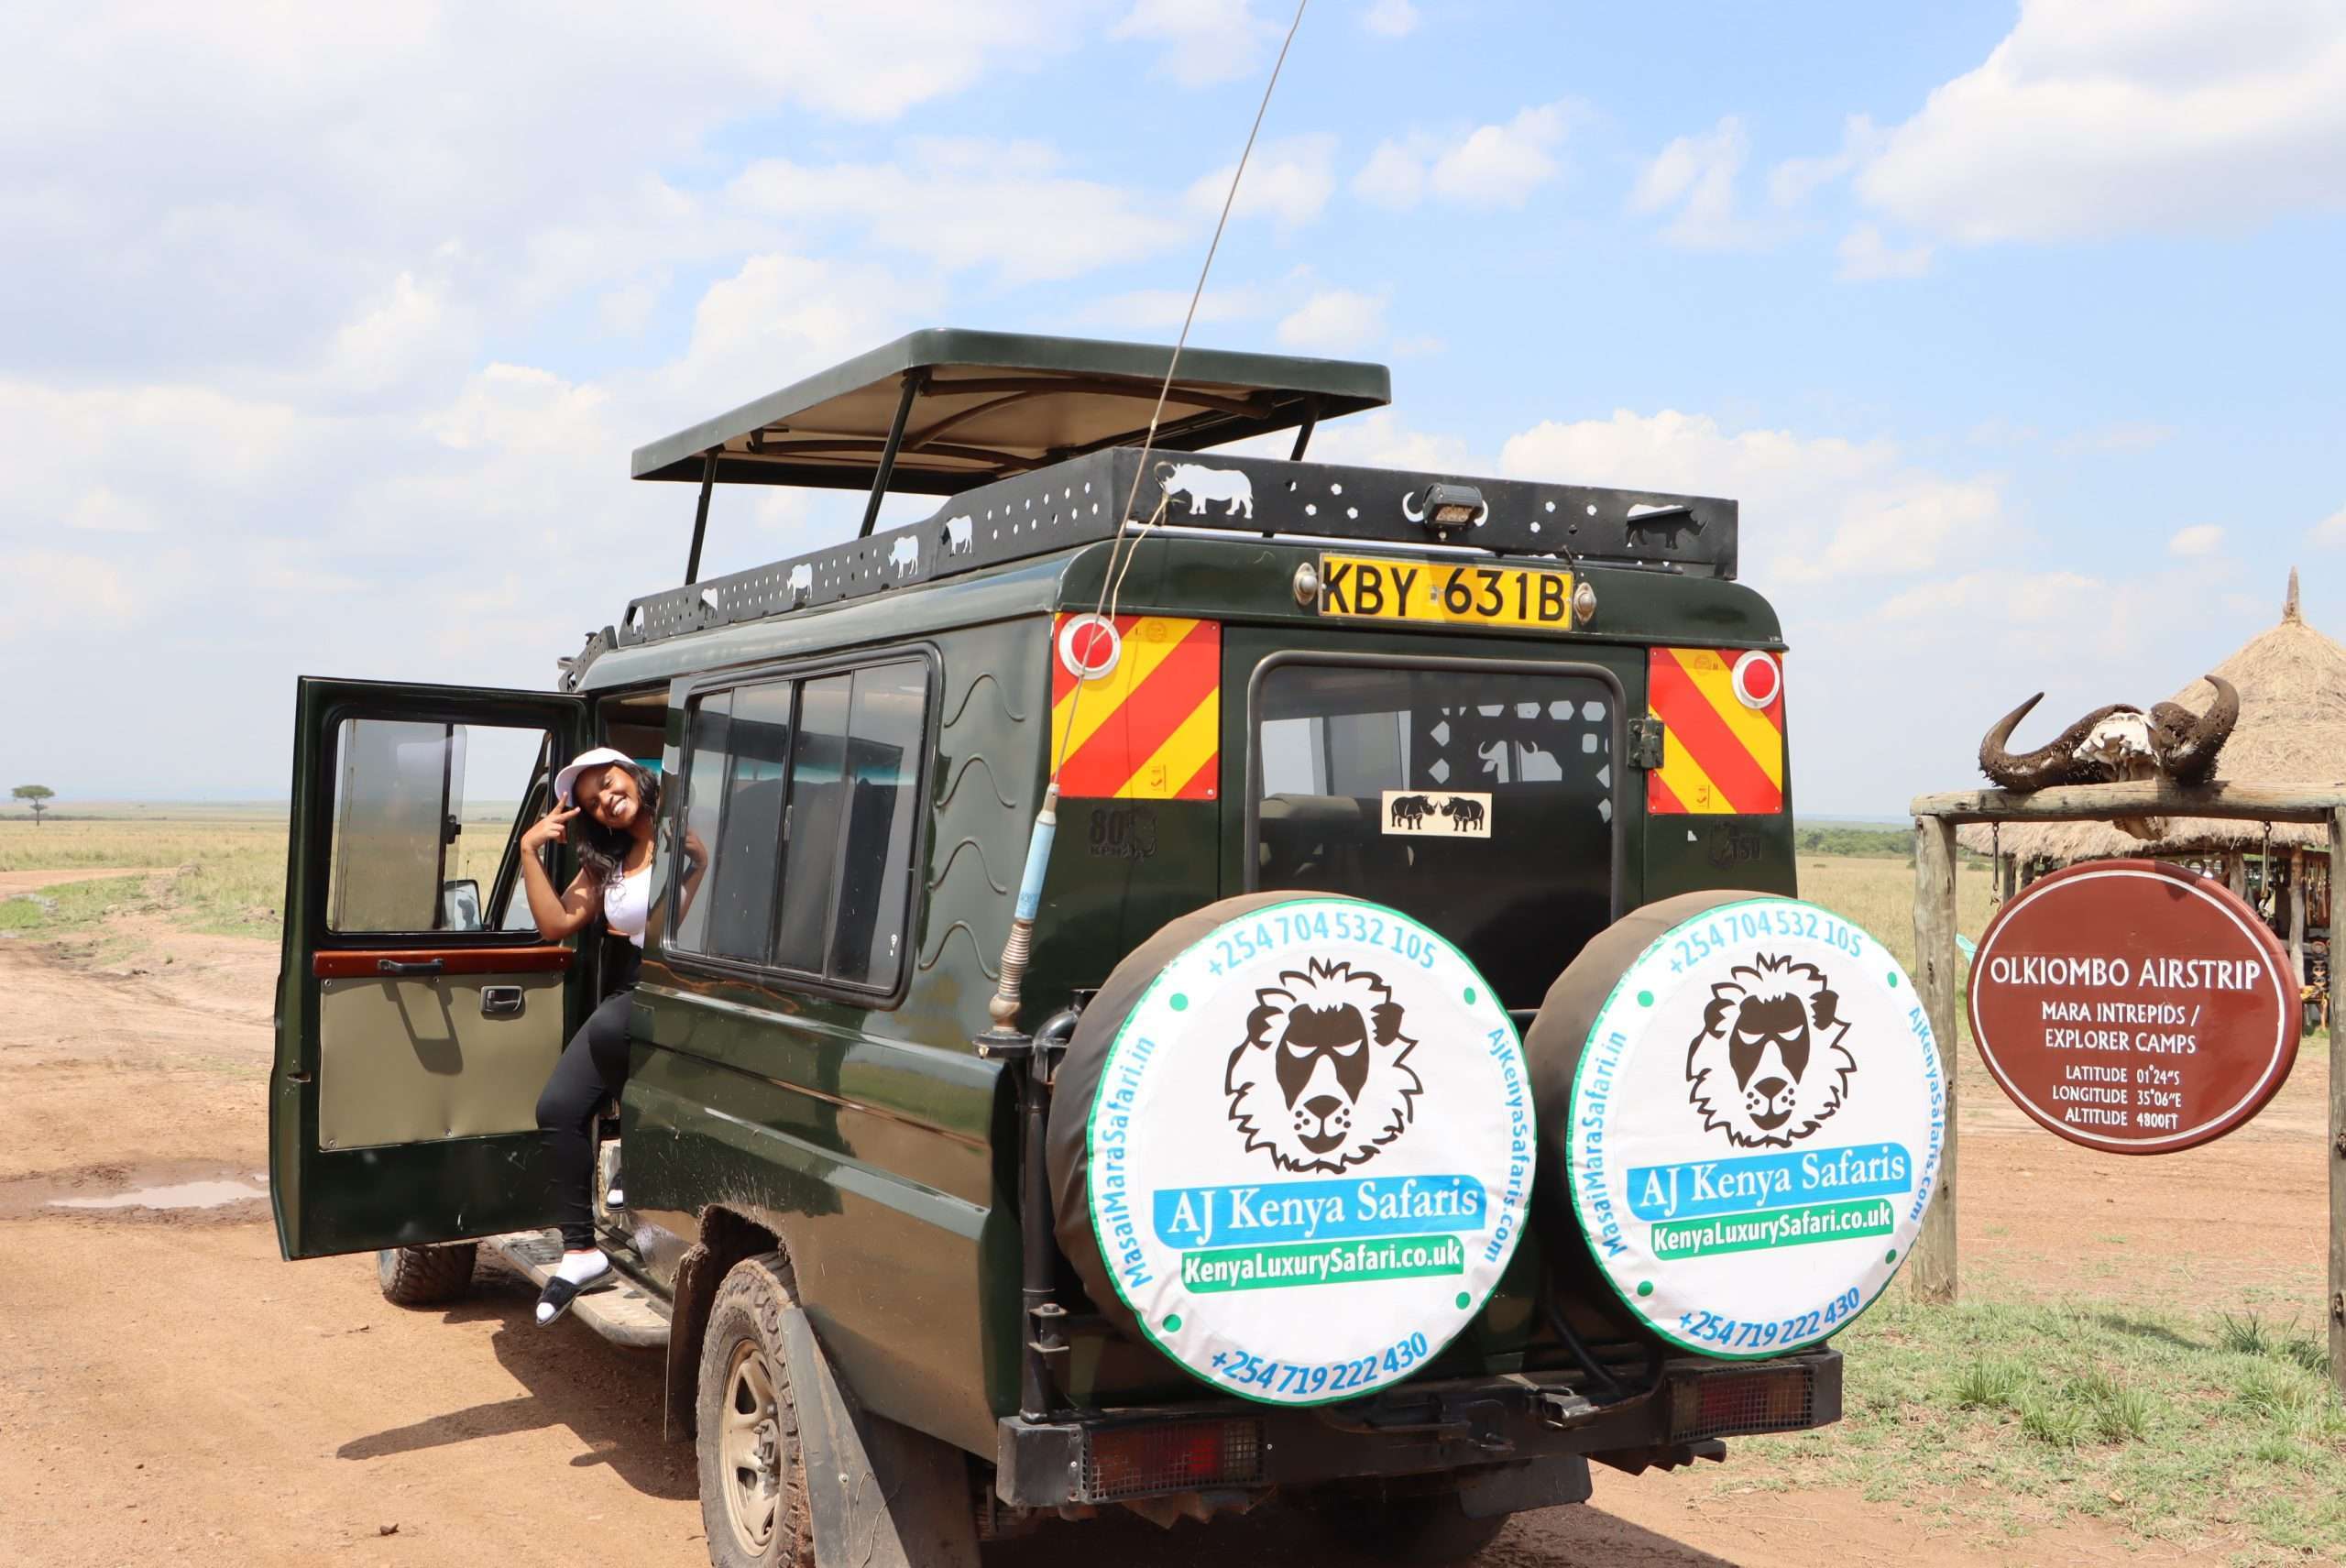 Maasai Mara National Reserve - Ol Kiombo Airstrip